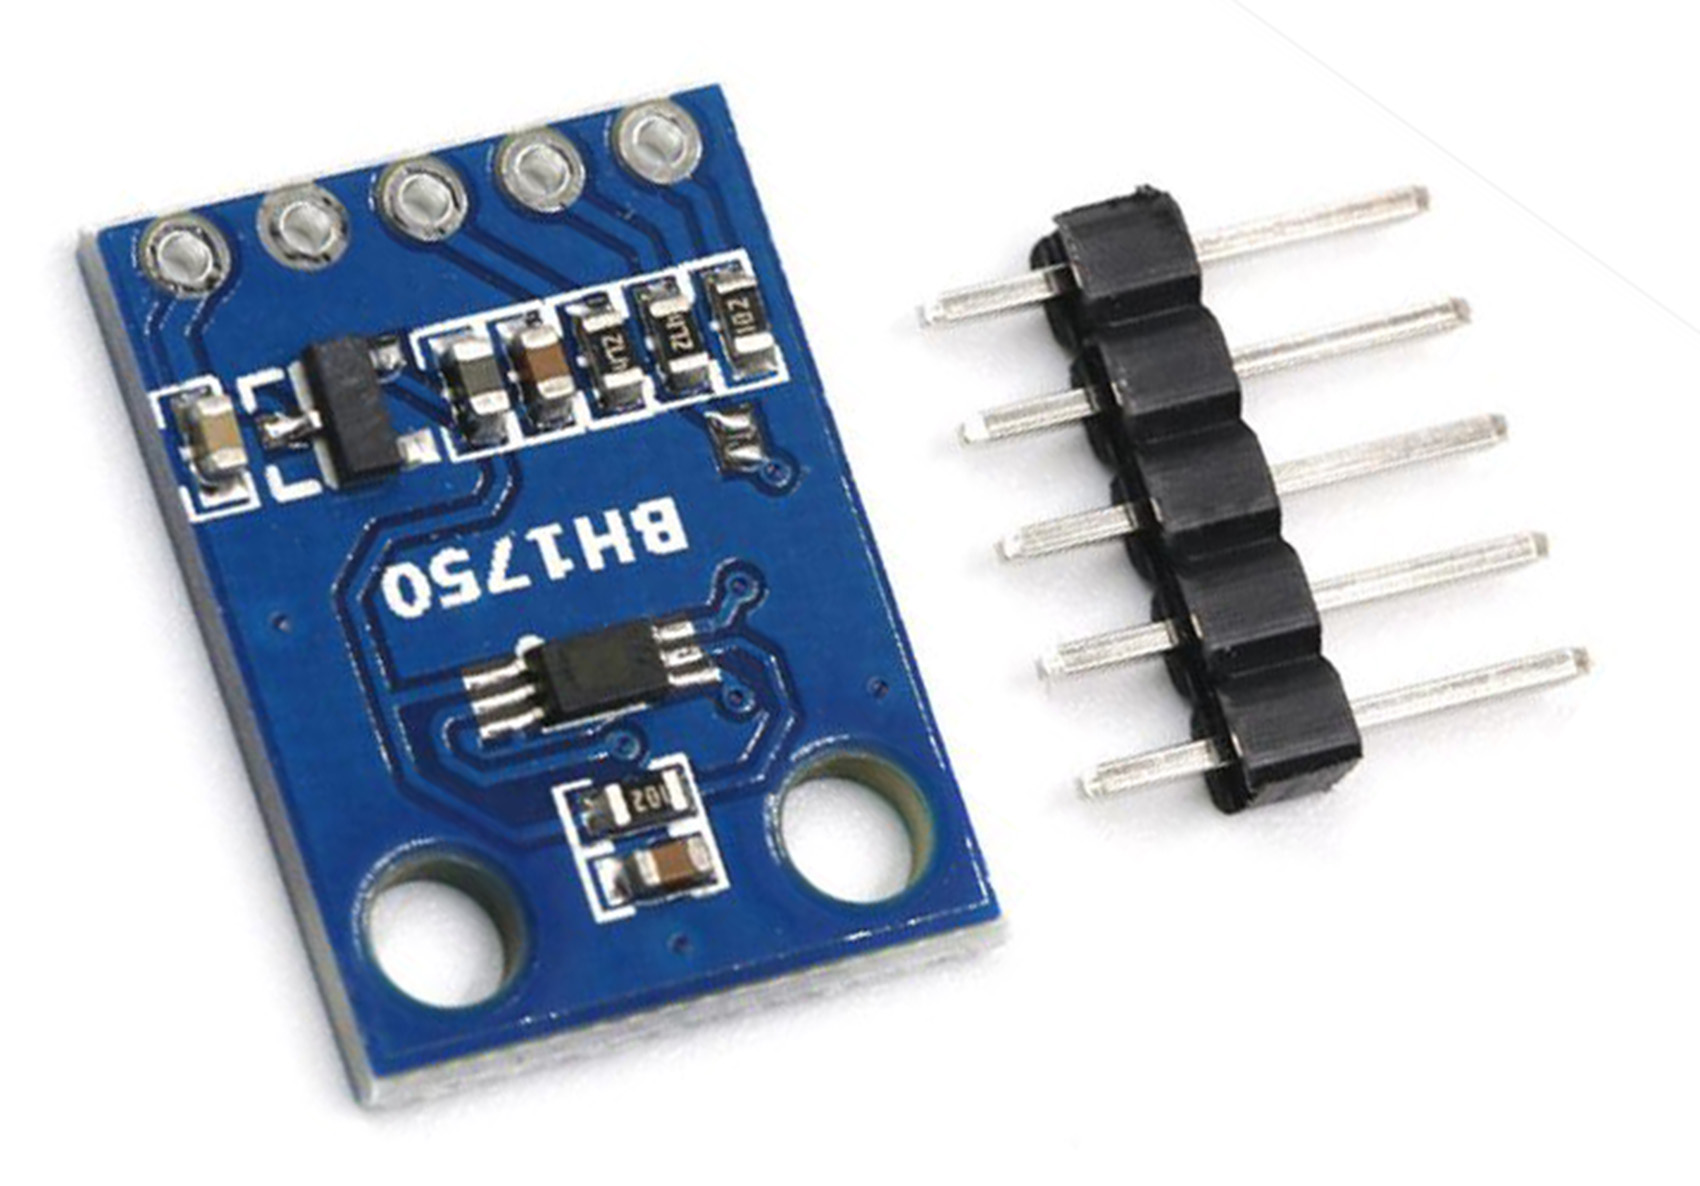 2 Pack GY-302 digital light intensity sensor BH1750 16bitAD module H&P